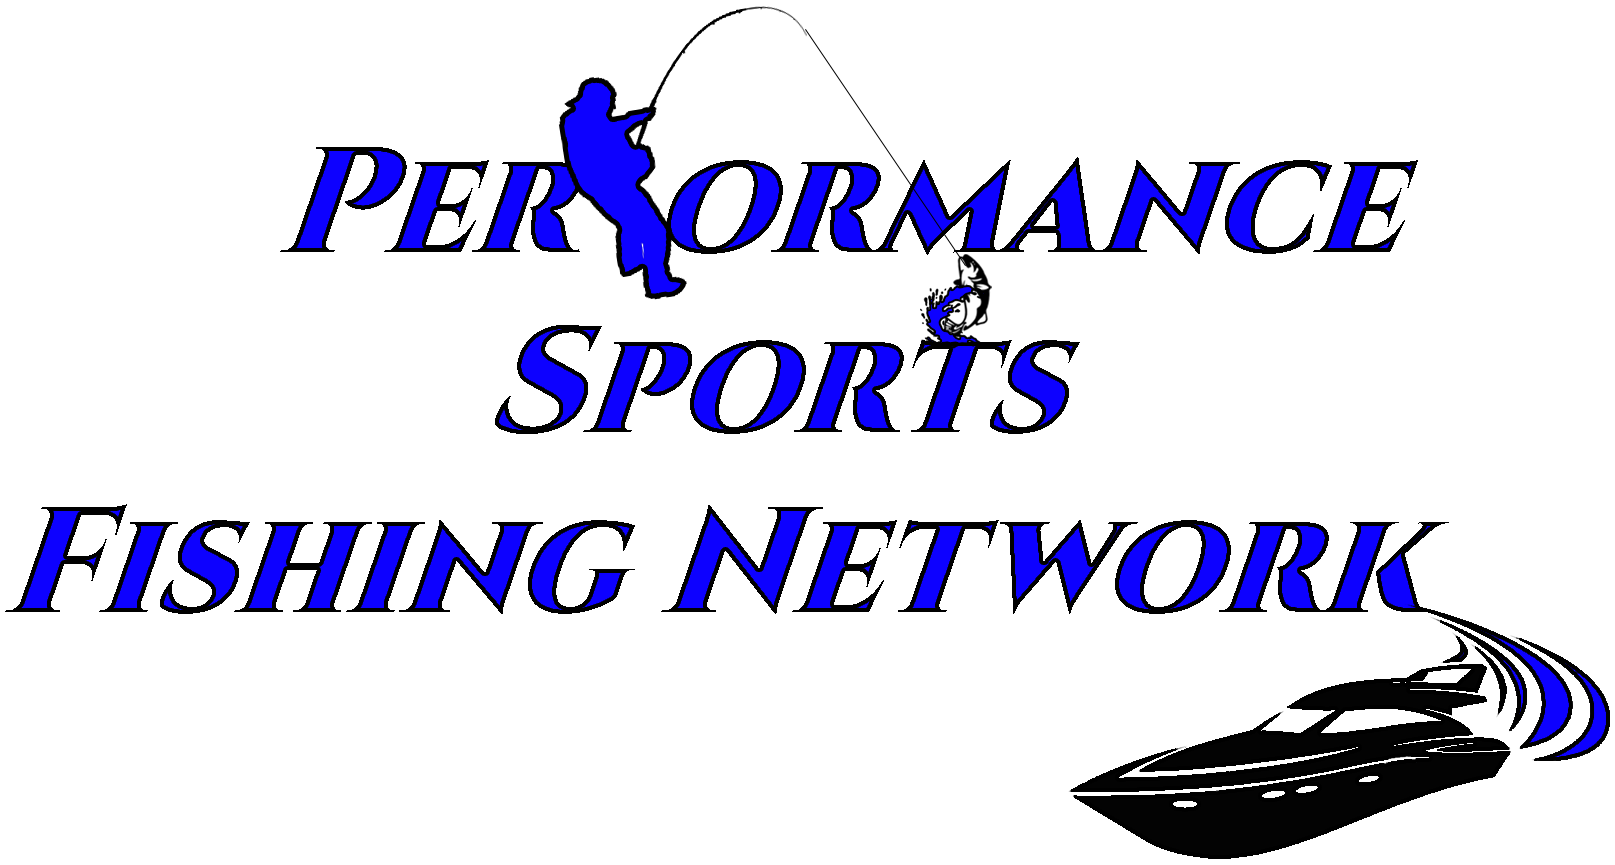 Performance Sports Fishing Network